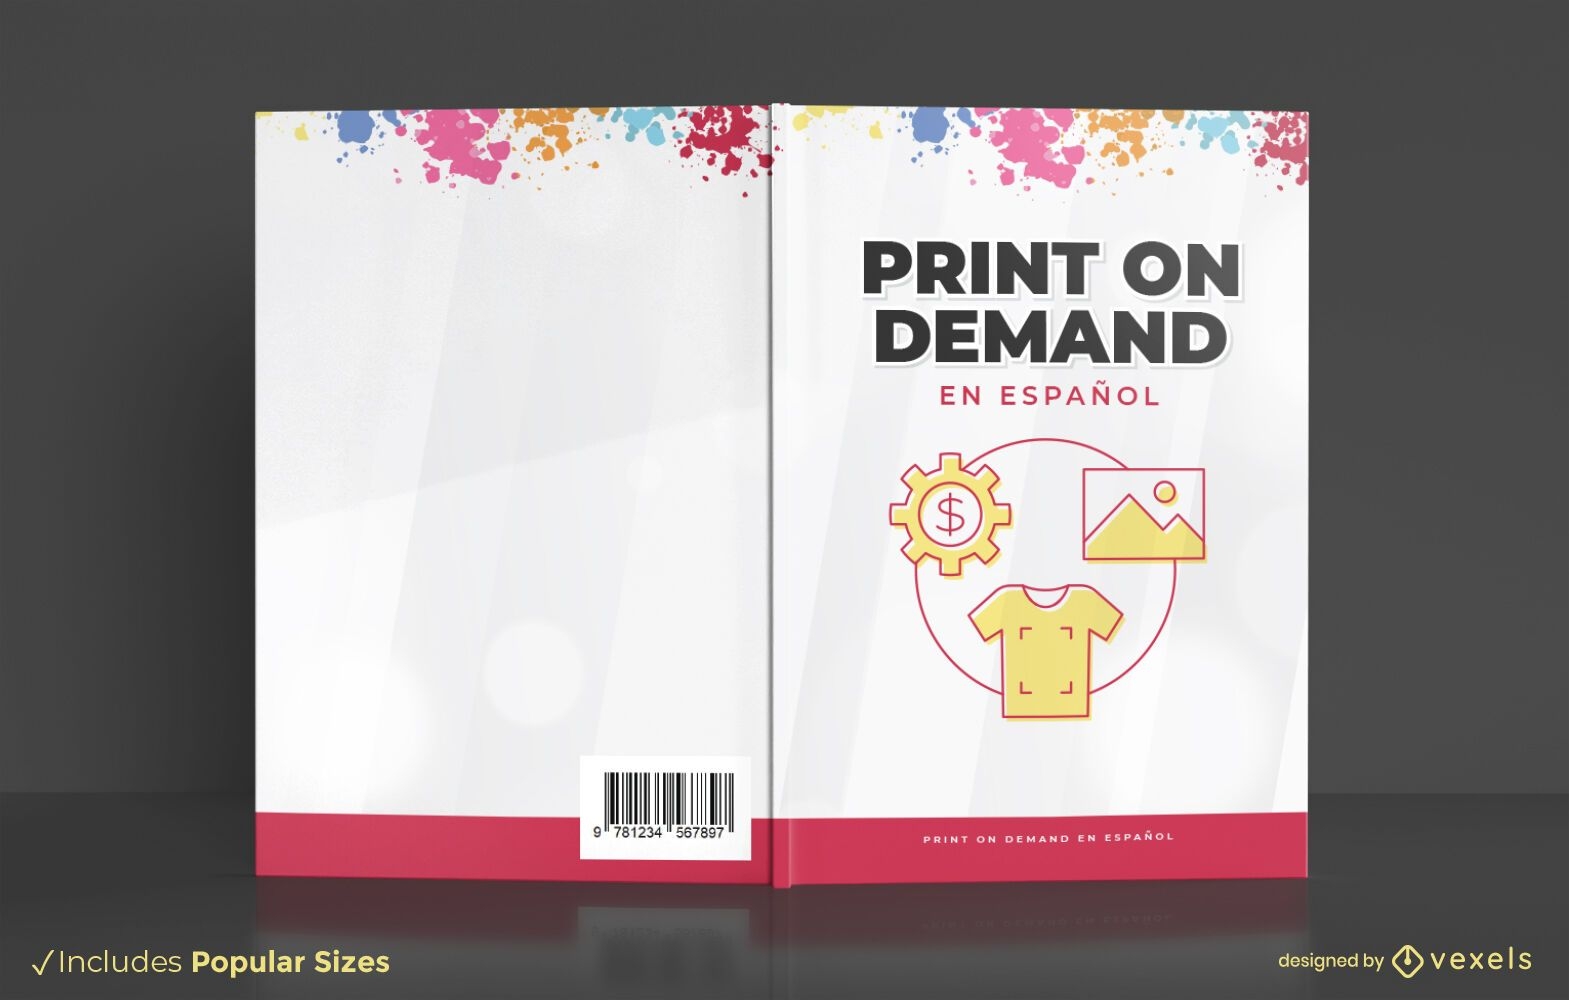 Print on demand book cover design